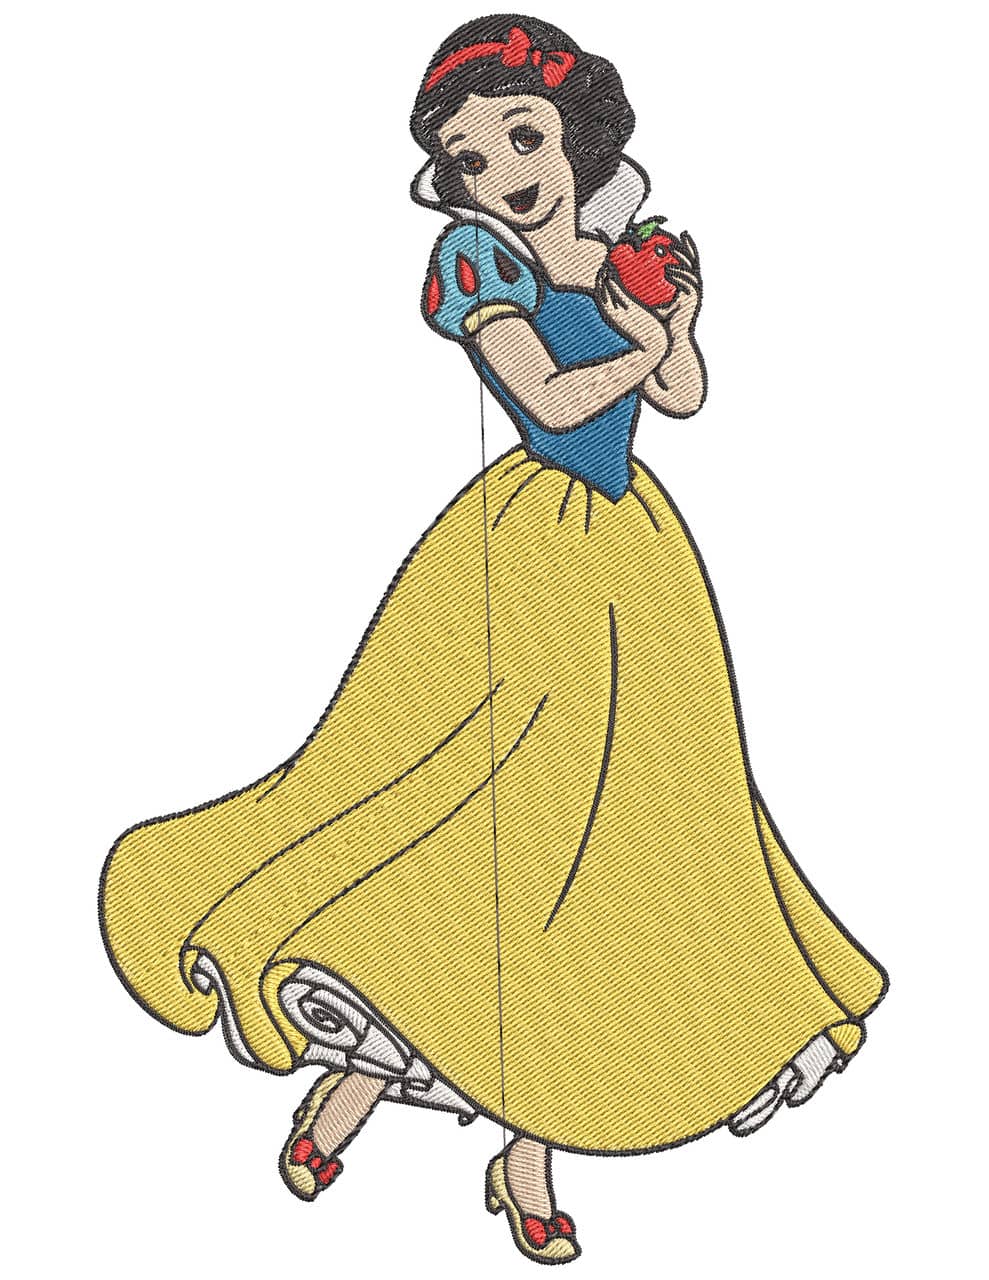 Snow White Princess Disney Seven Dwarfs Embroidery Design 027 Digital Embroidery Designs 